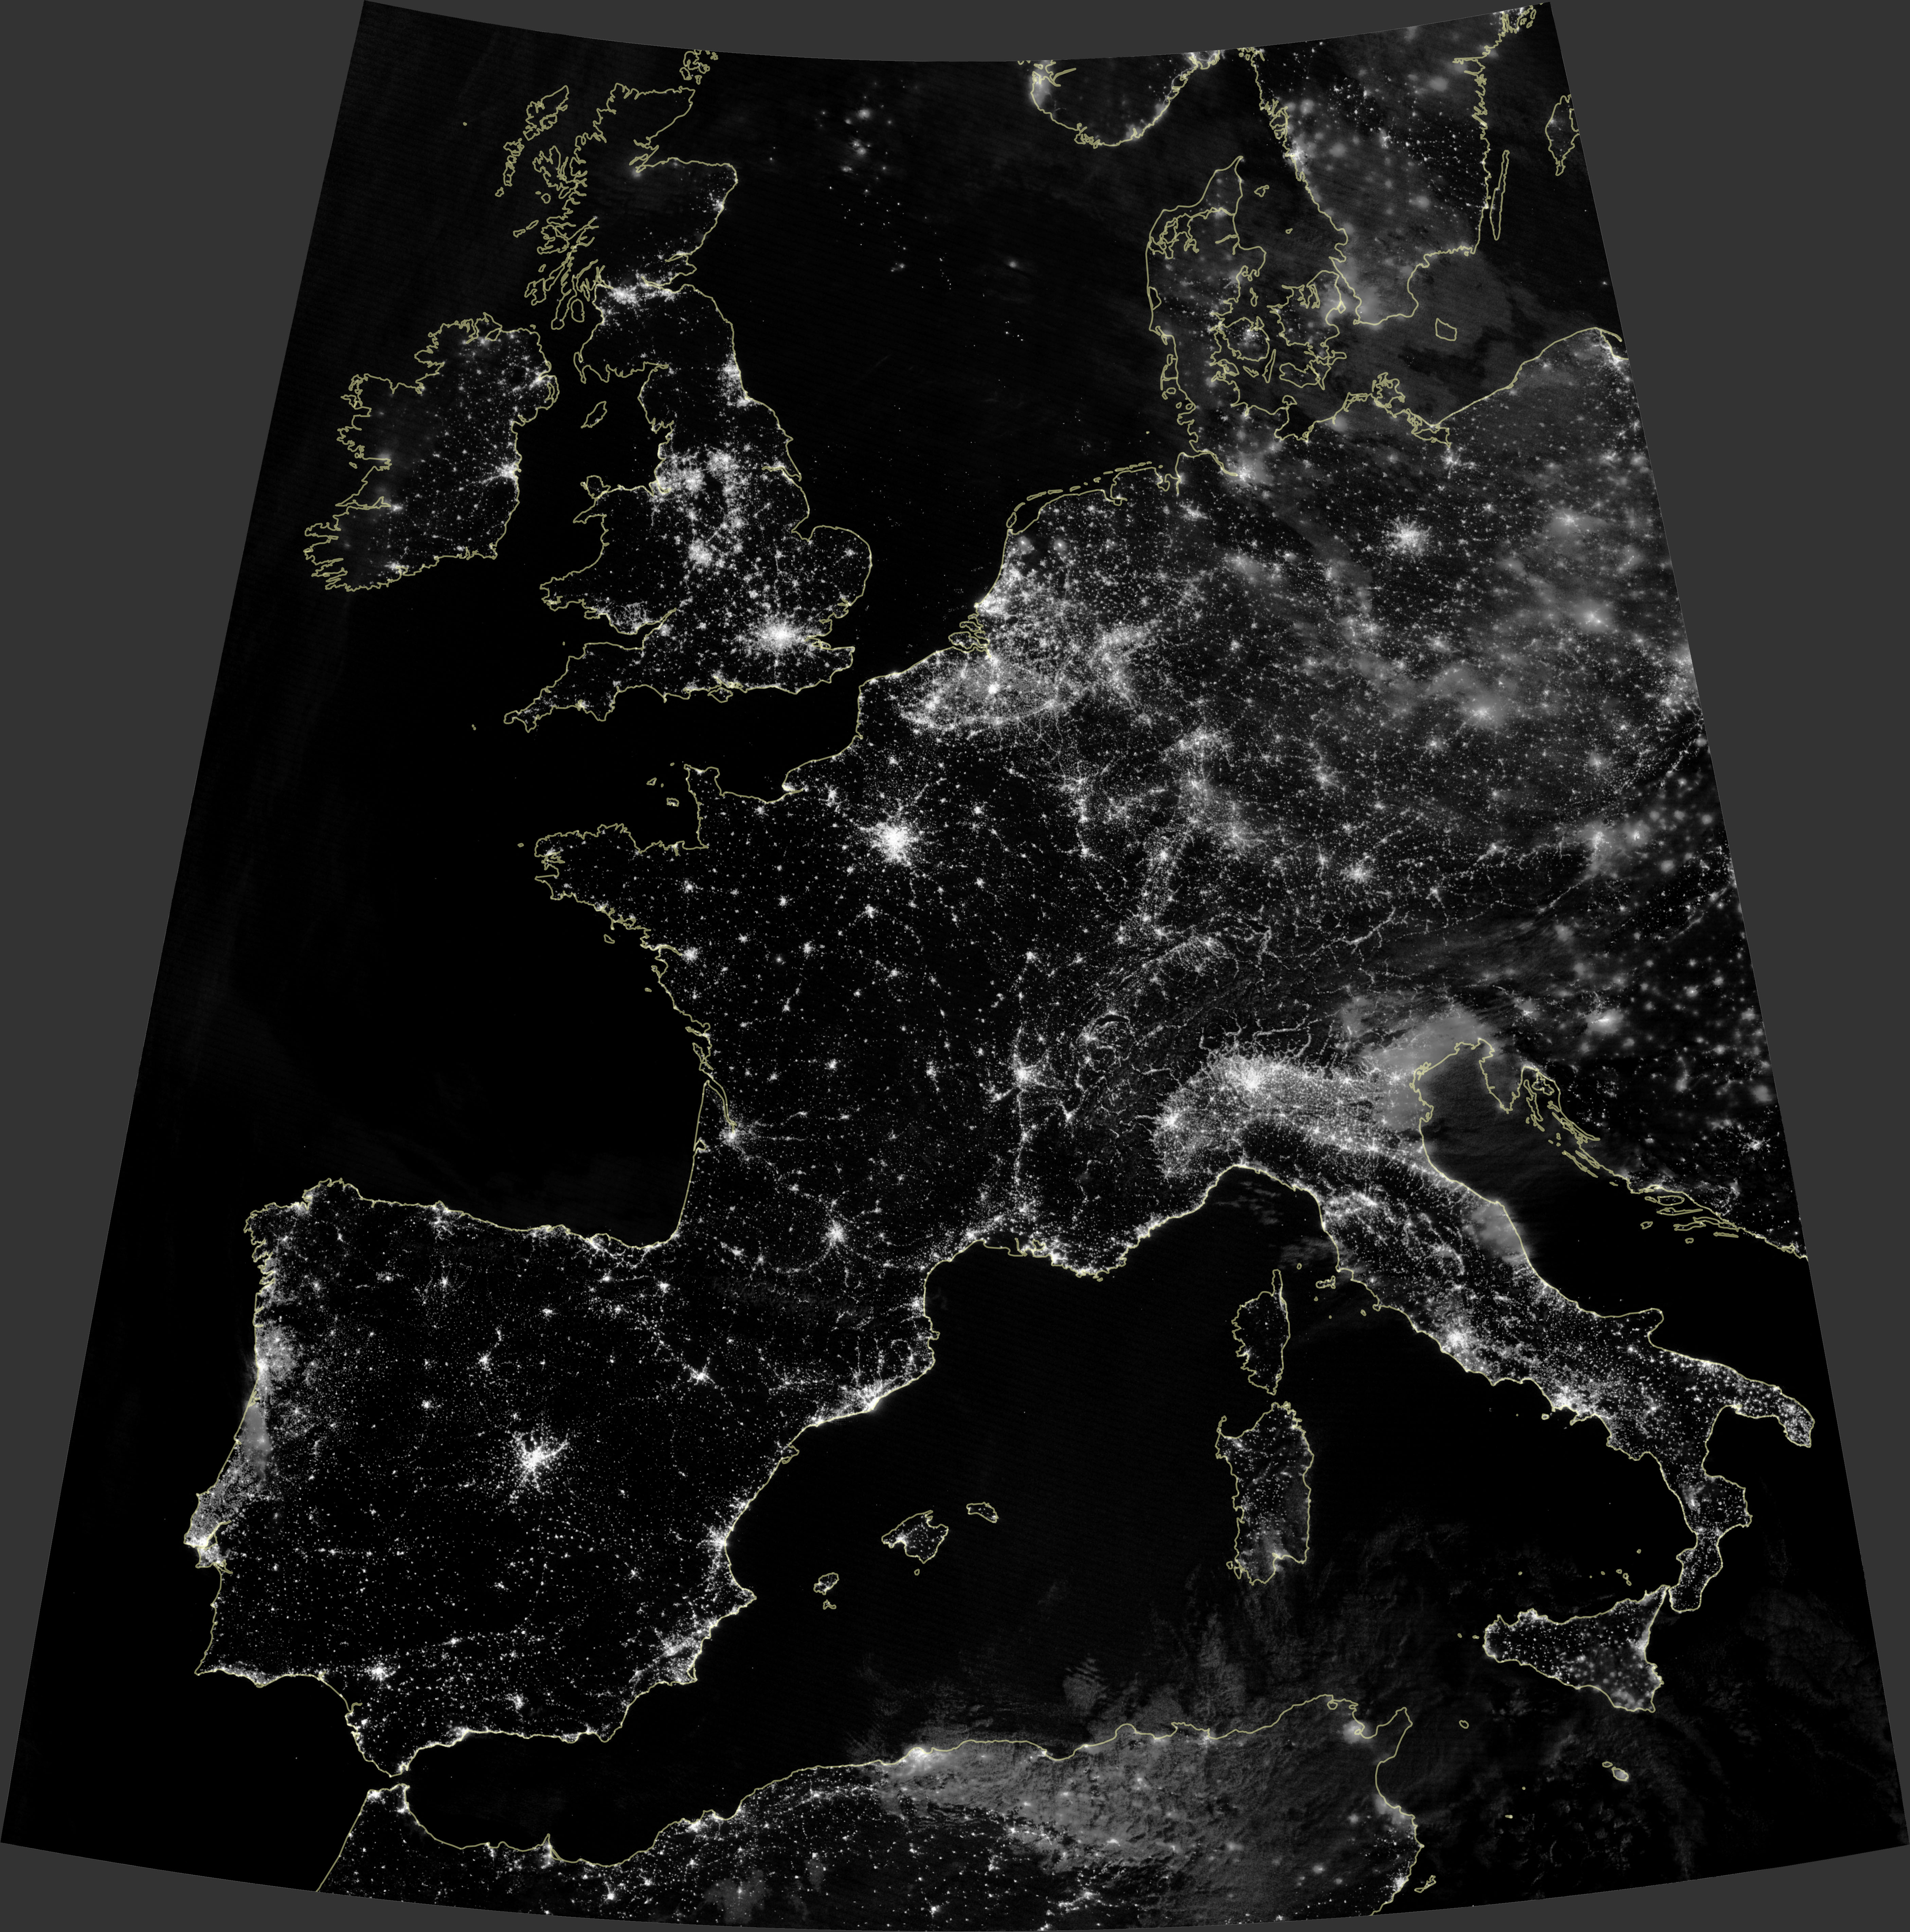 Europa de noche